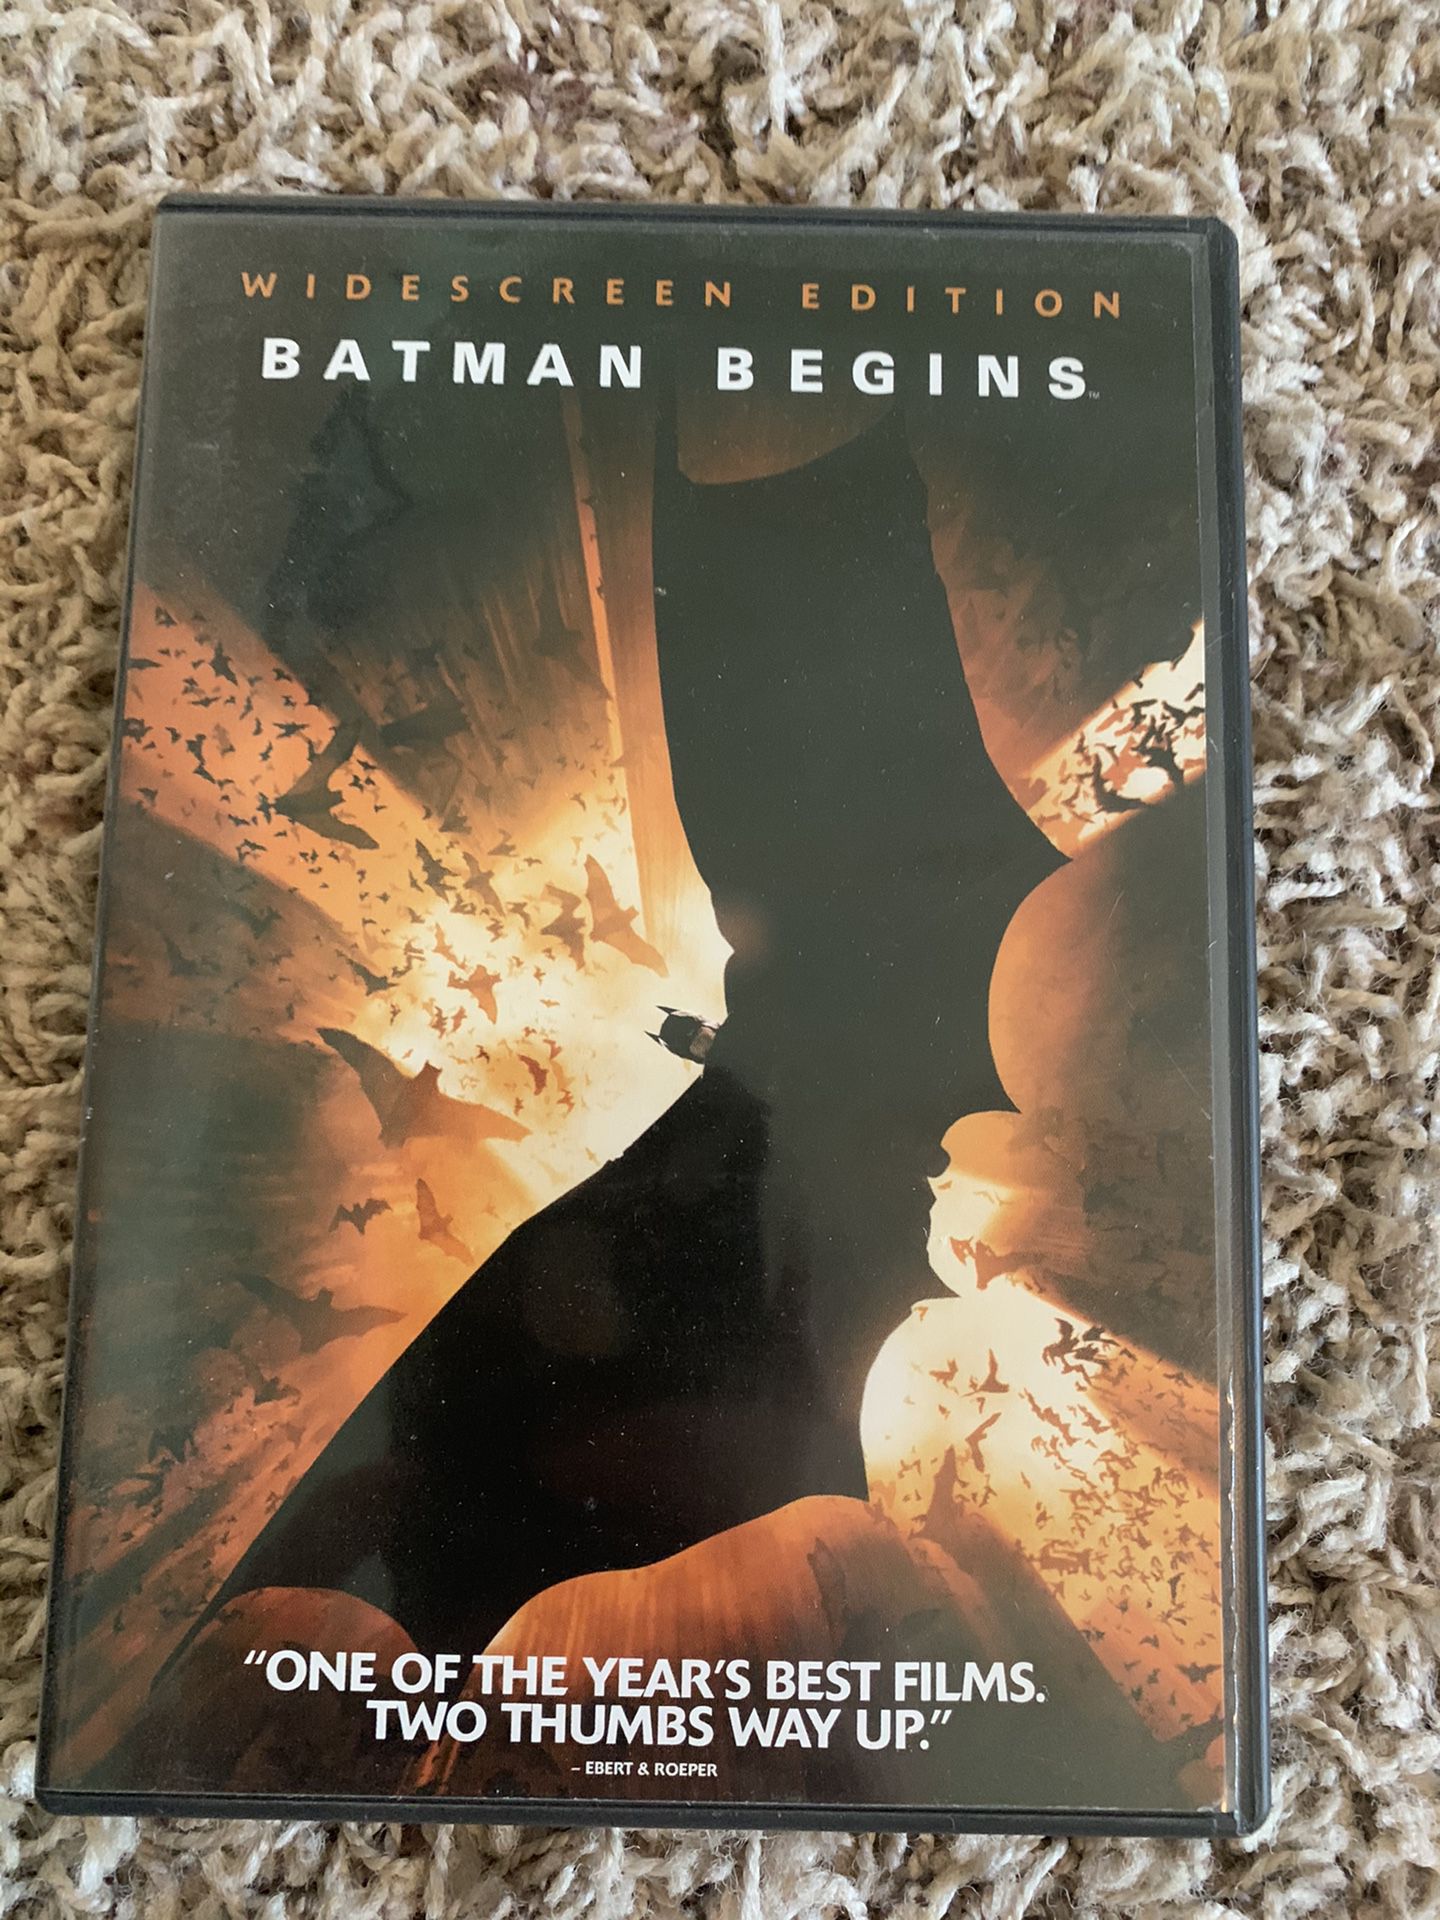 Batman begins on DVD